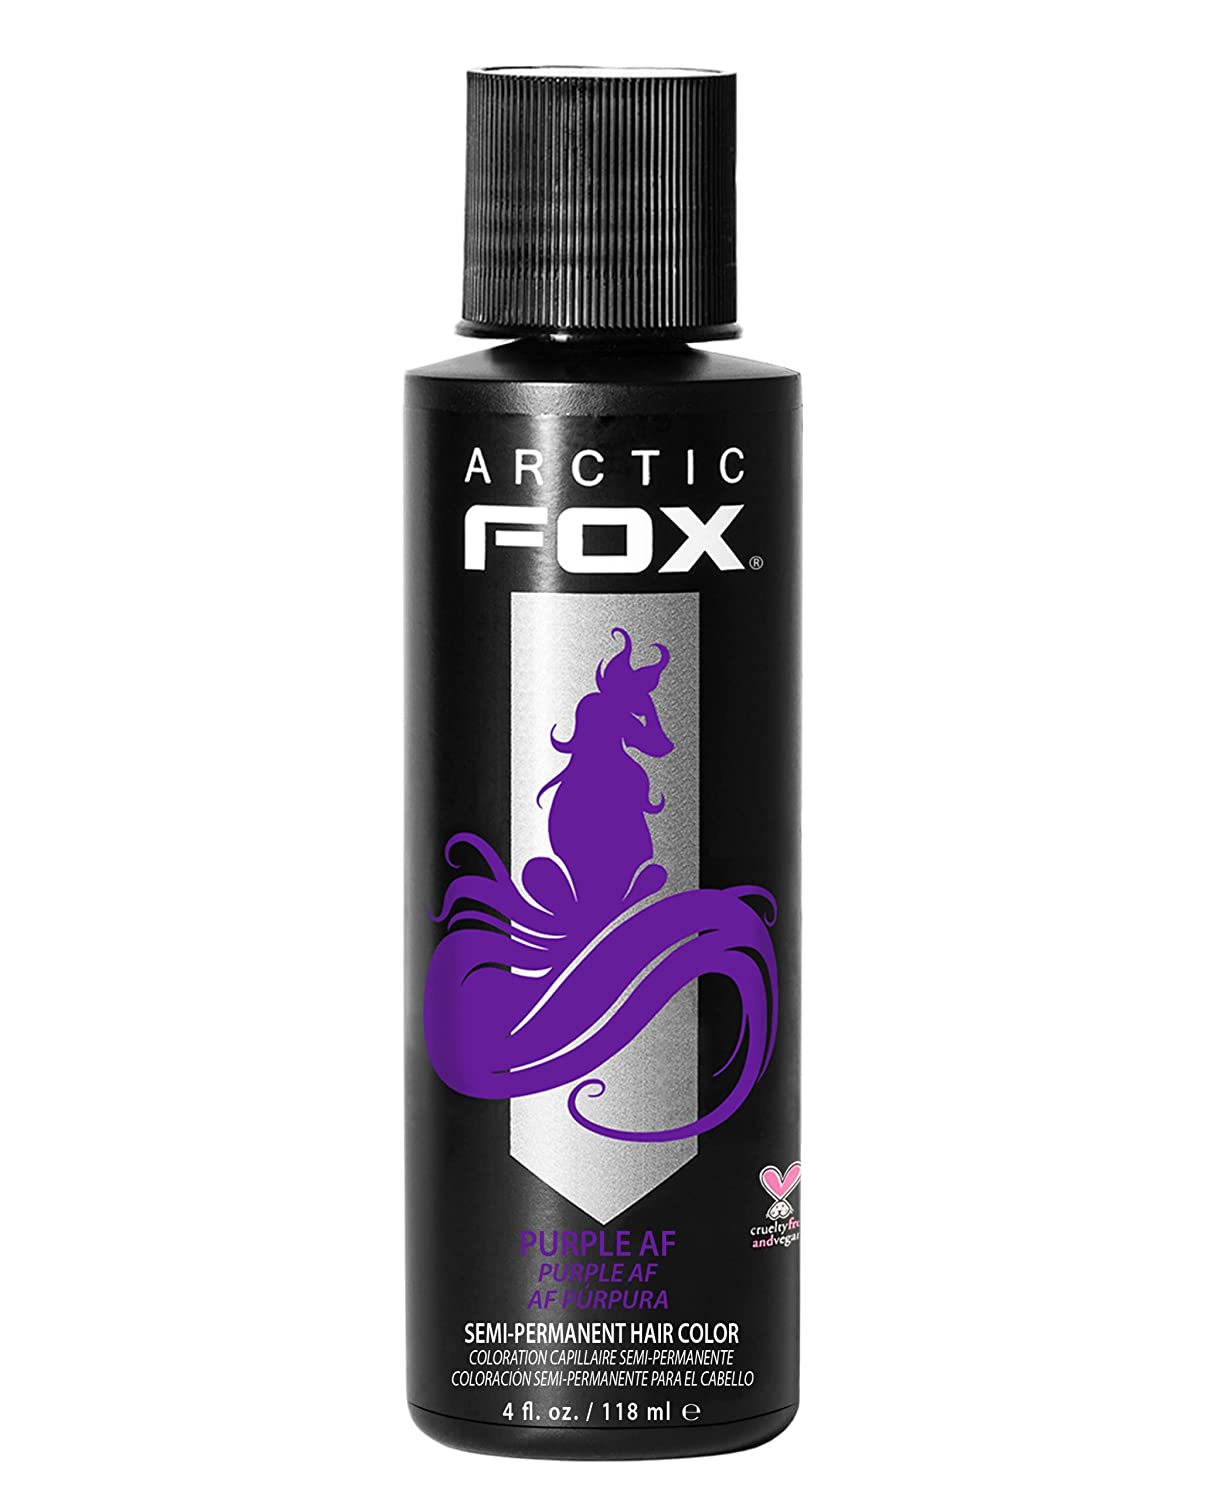 ARCTIC FOX Vegan and Cruelty-Free Semi-Permanent Hair [...]